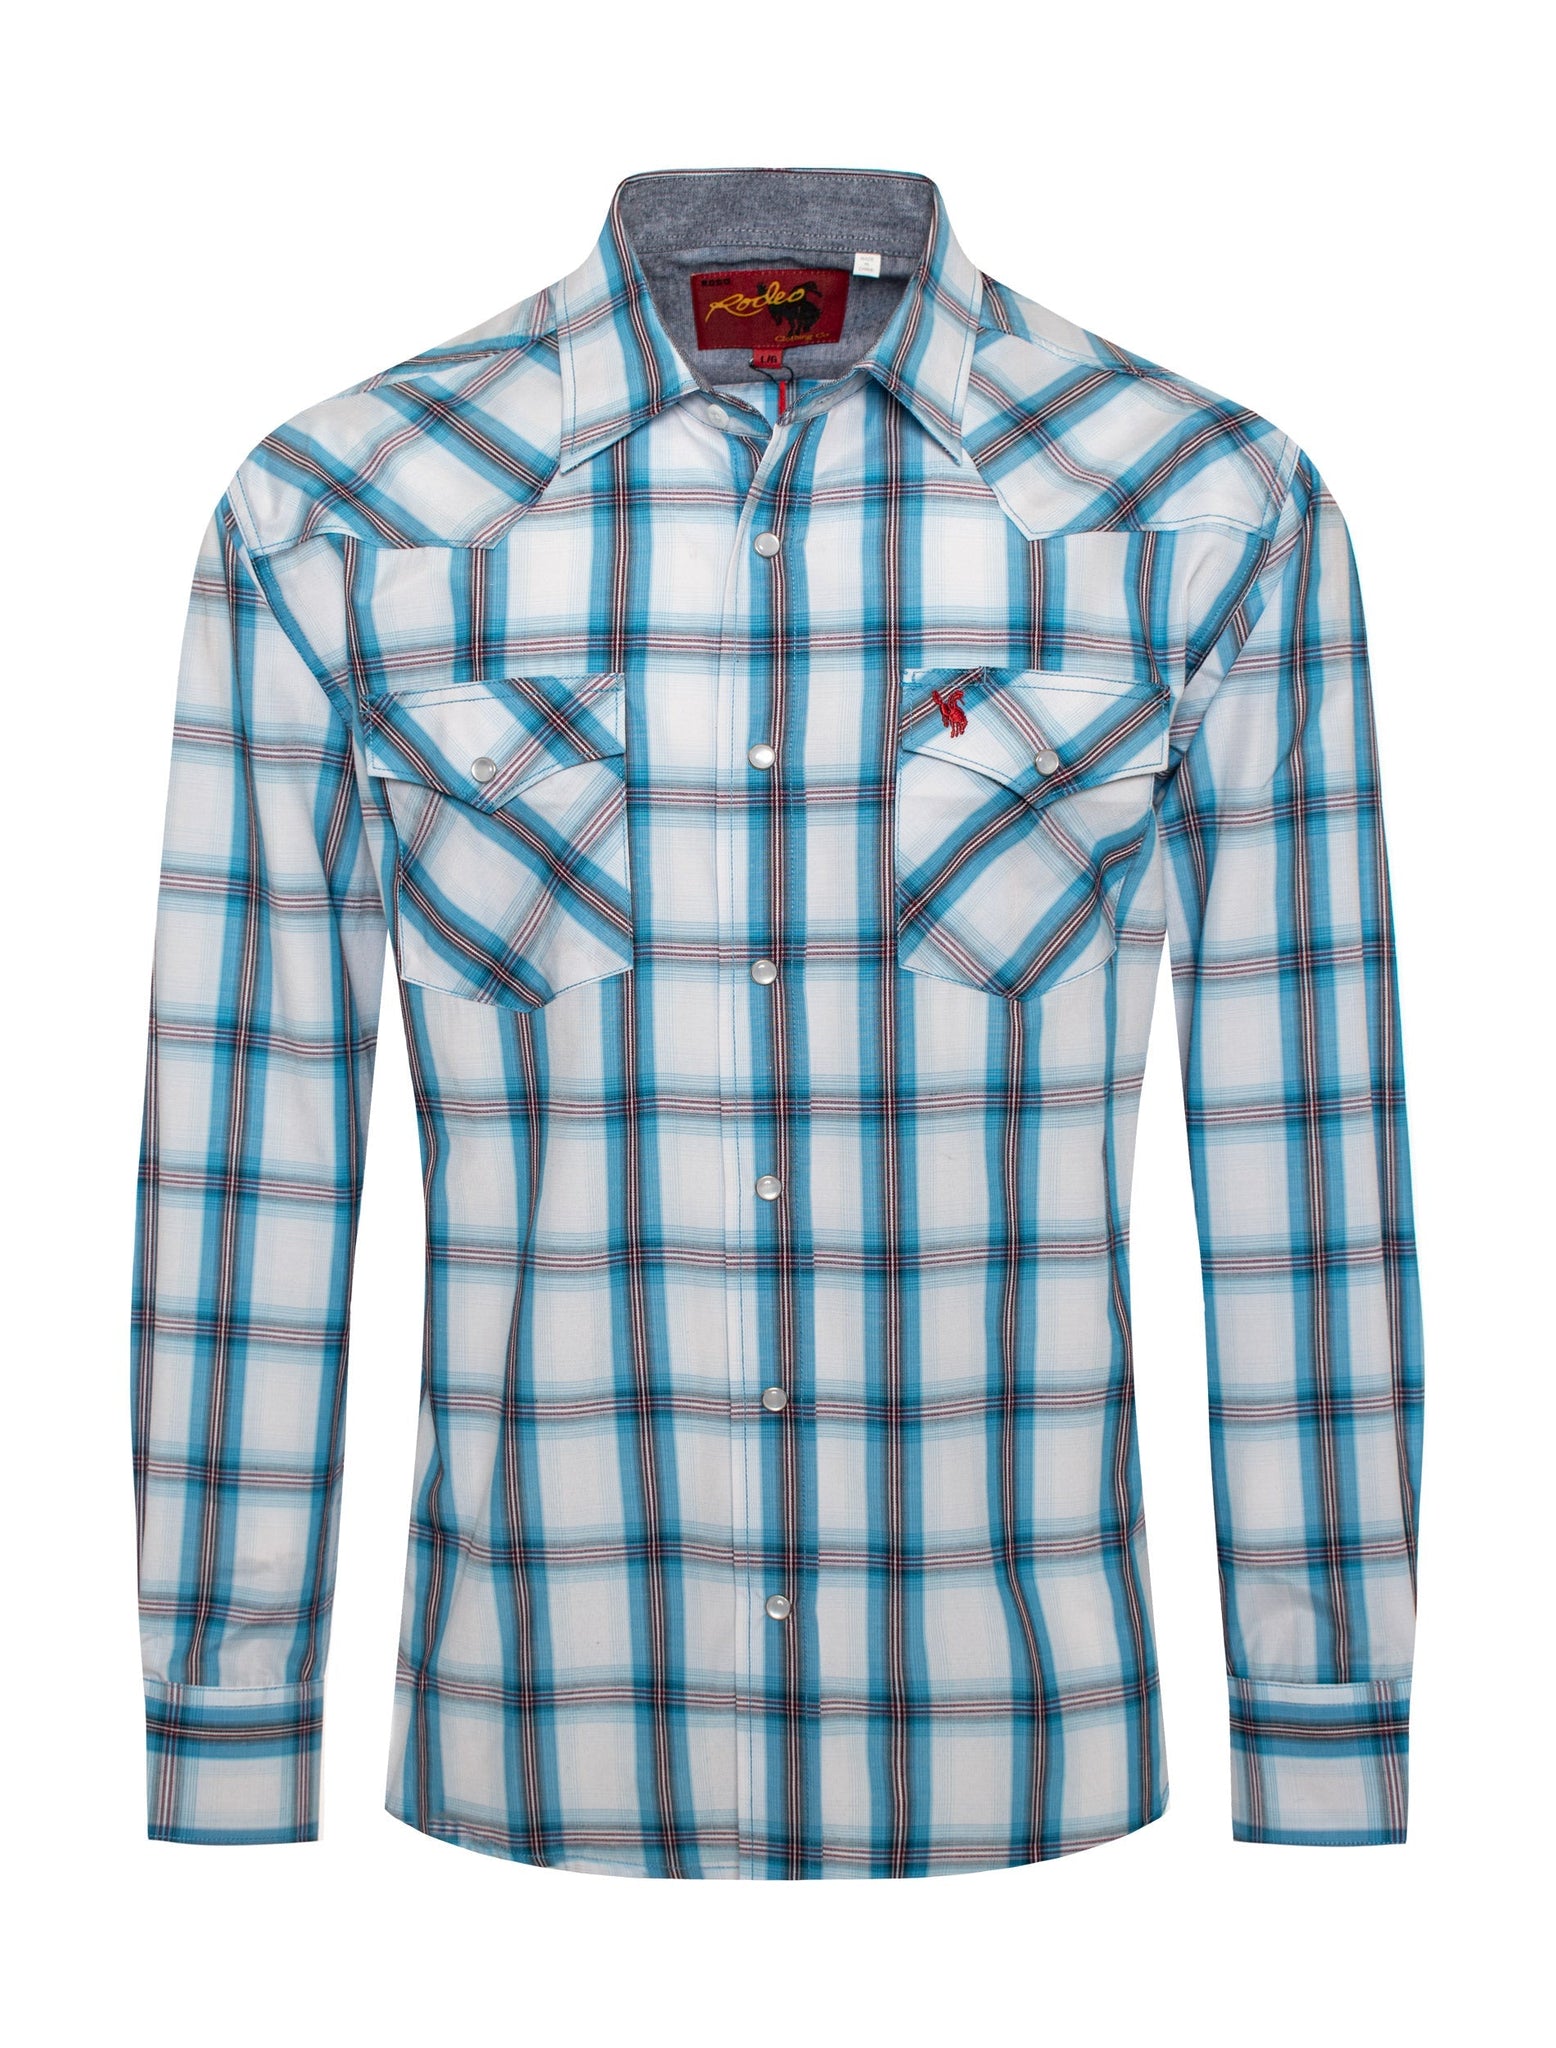 Men's Western Long Sleeve Pearl Snap Plaid Shirt-PS400-410